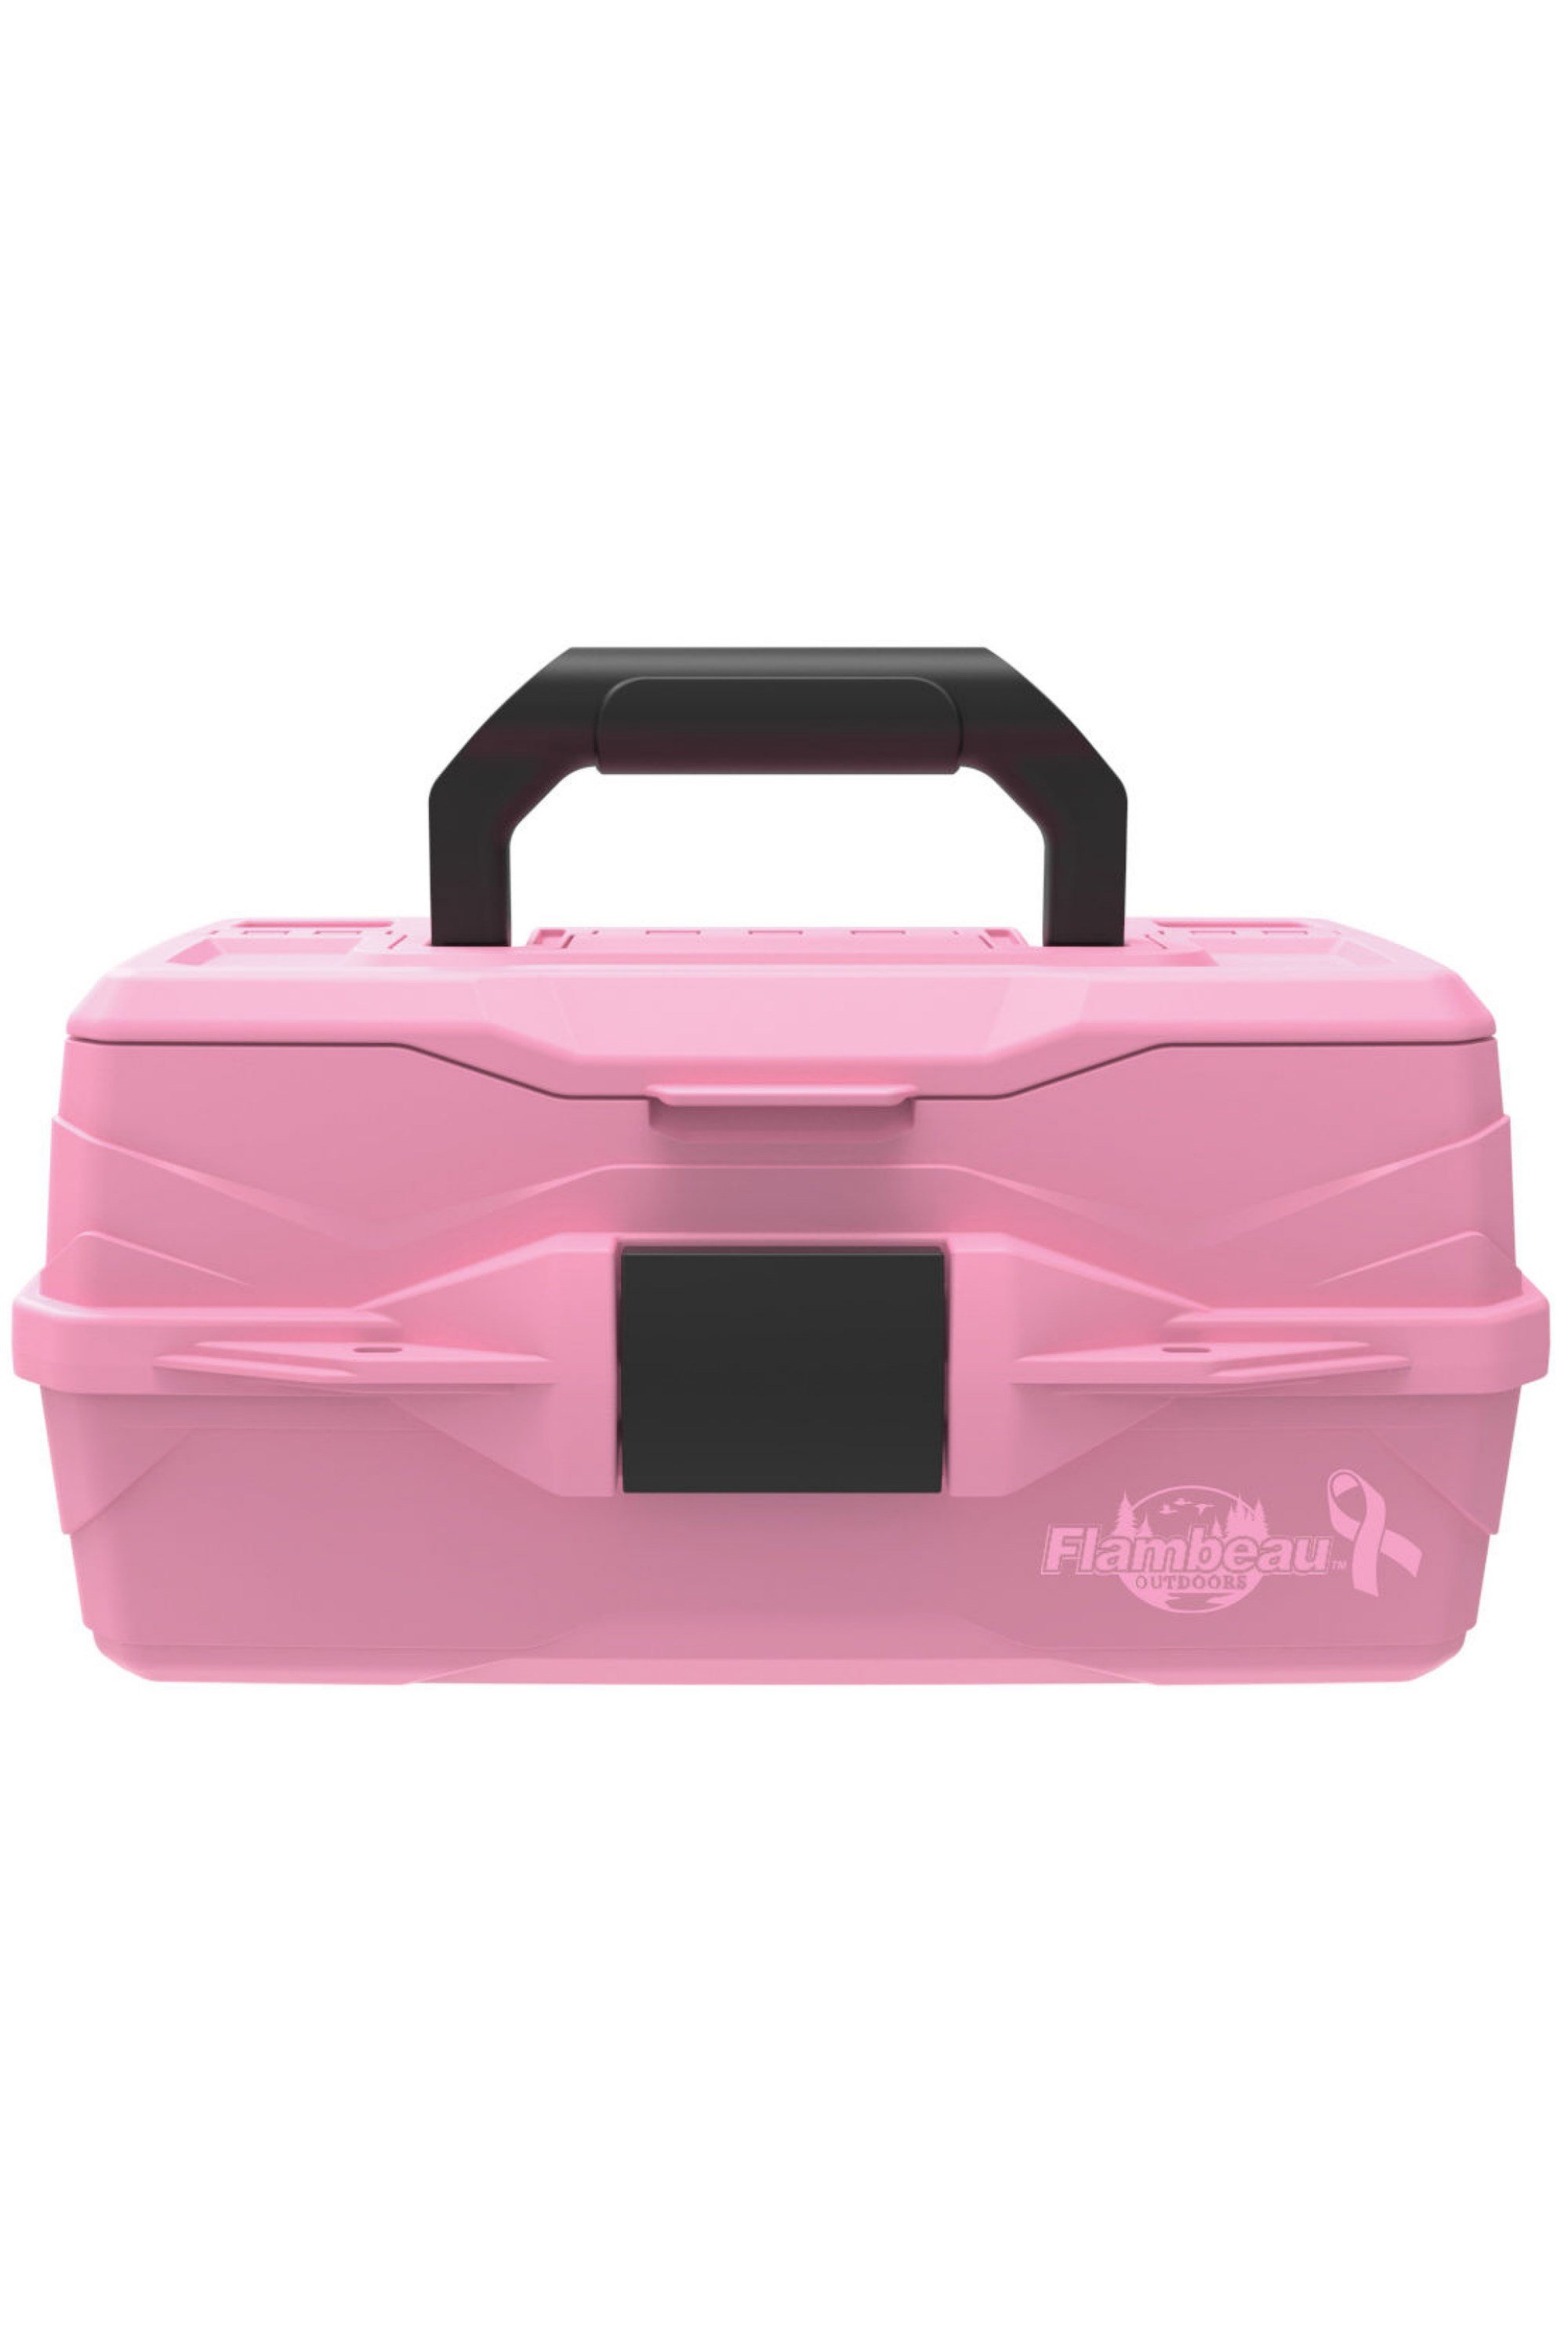 One Tray Pink Ribbon Classic Tackle Box